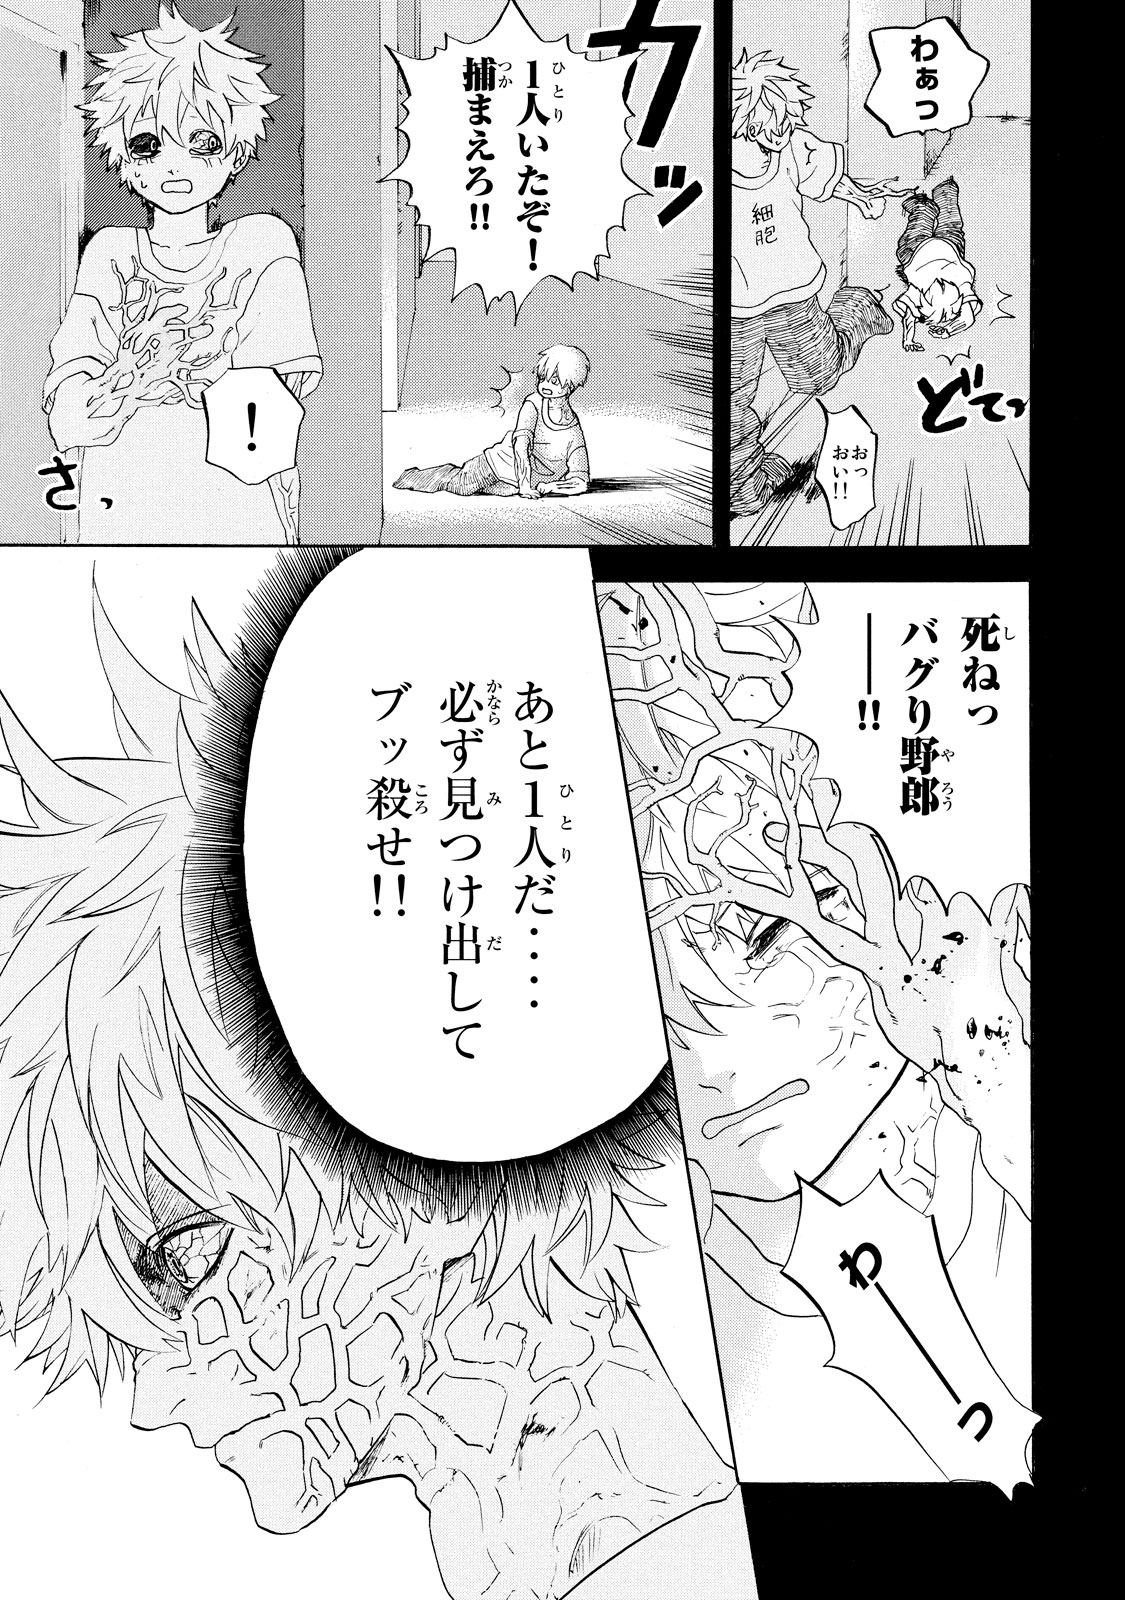 Hataraku Saibou - Chapter 9 - Page 26